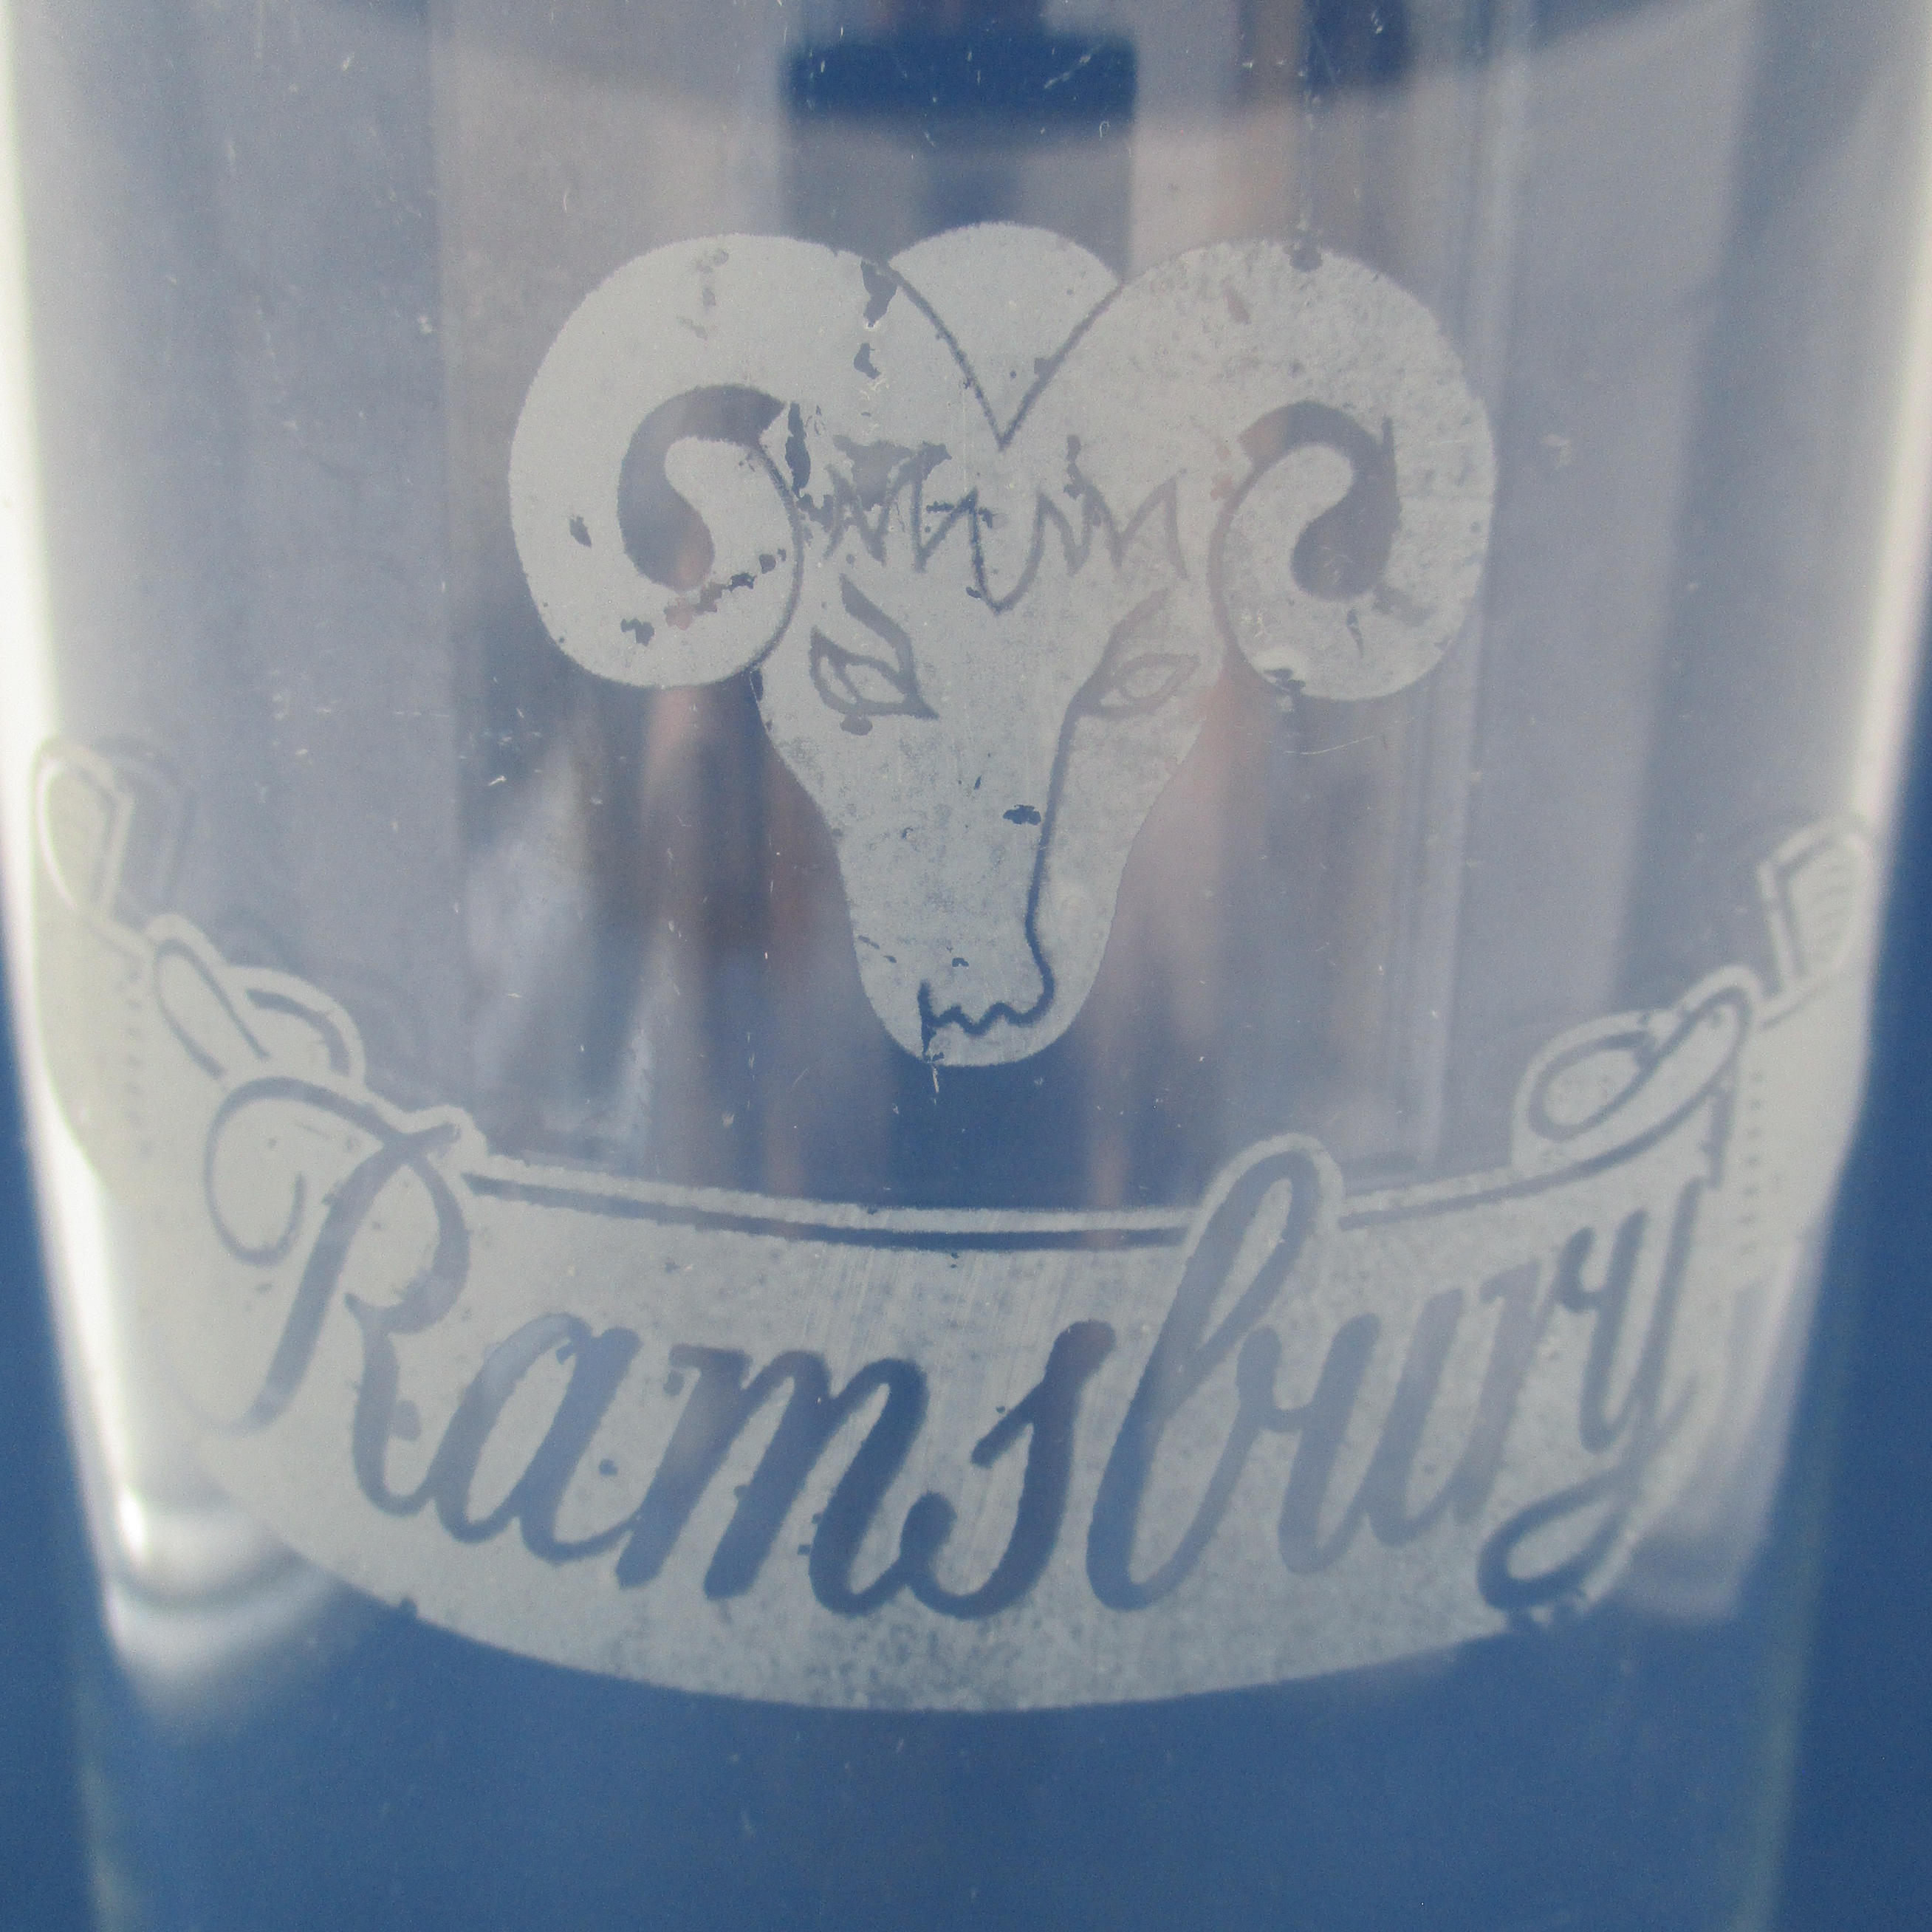 Old Ramsbury Logo